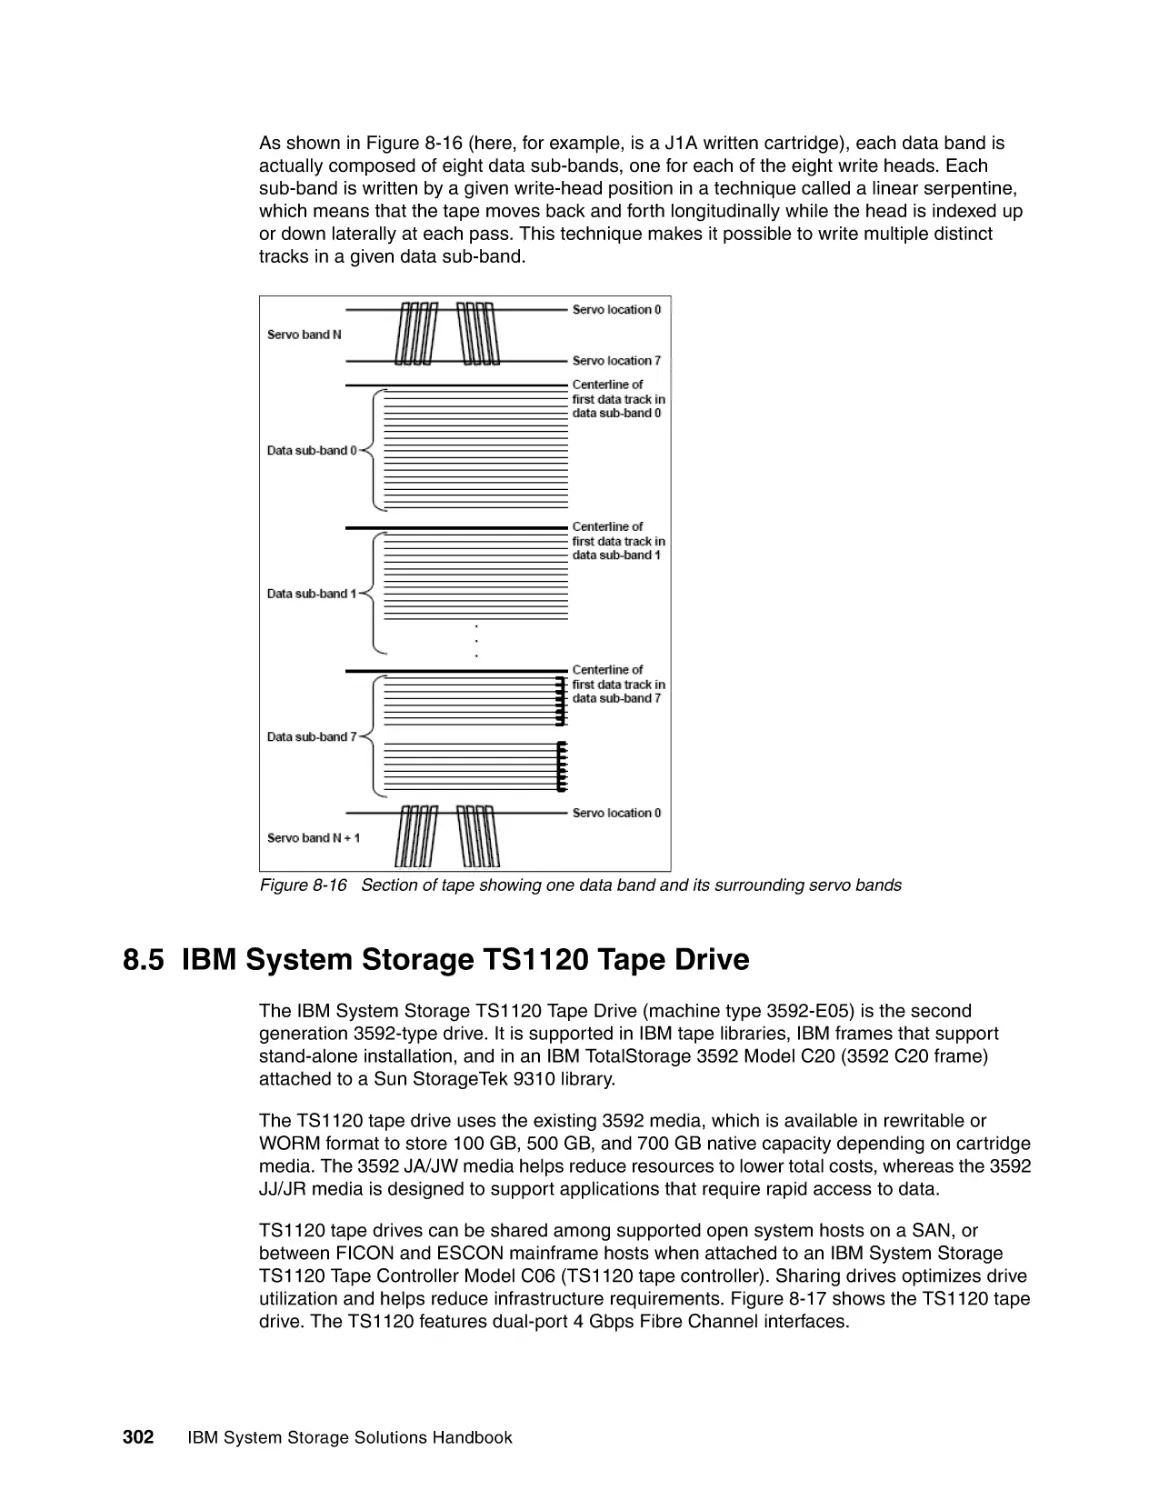 8.5 IBM System Storage TS1120 Tape Drive